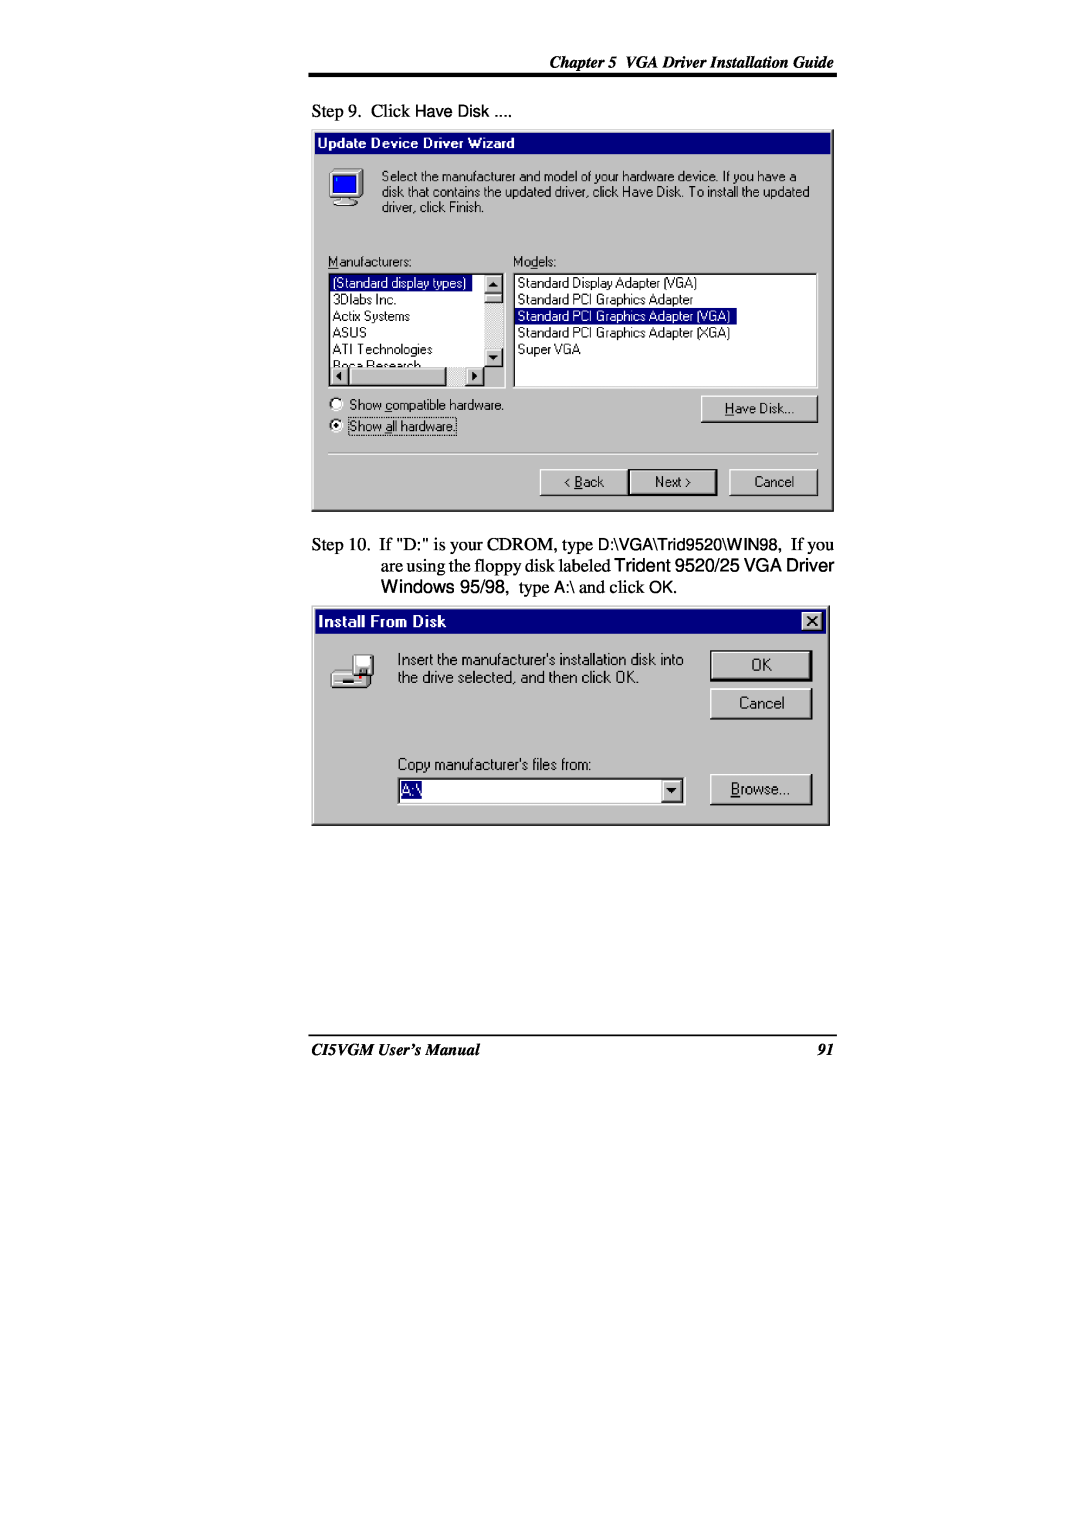 IBM CI5VGM Series user manual Click Have Disk, VGA Driver Installation Guide, CI5VGM User’s Manual 